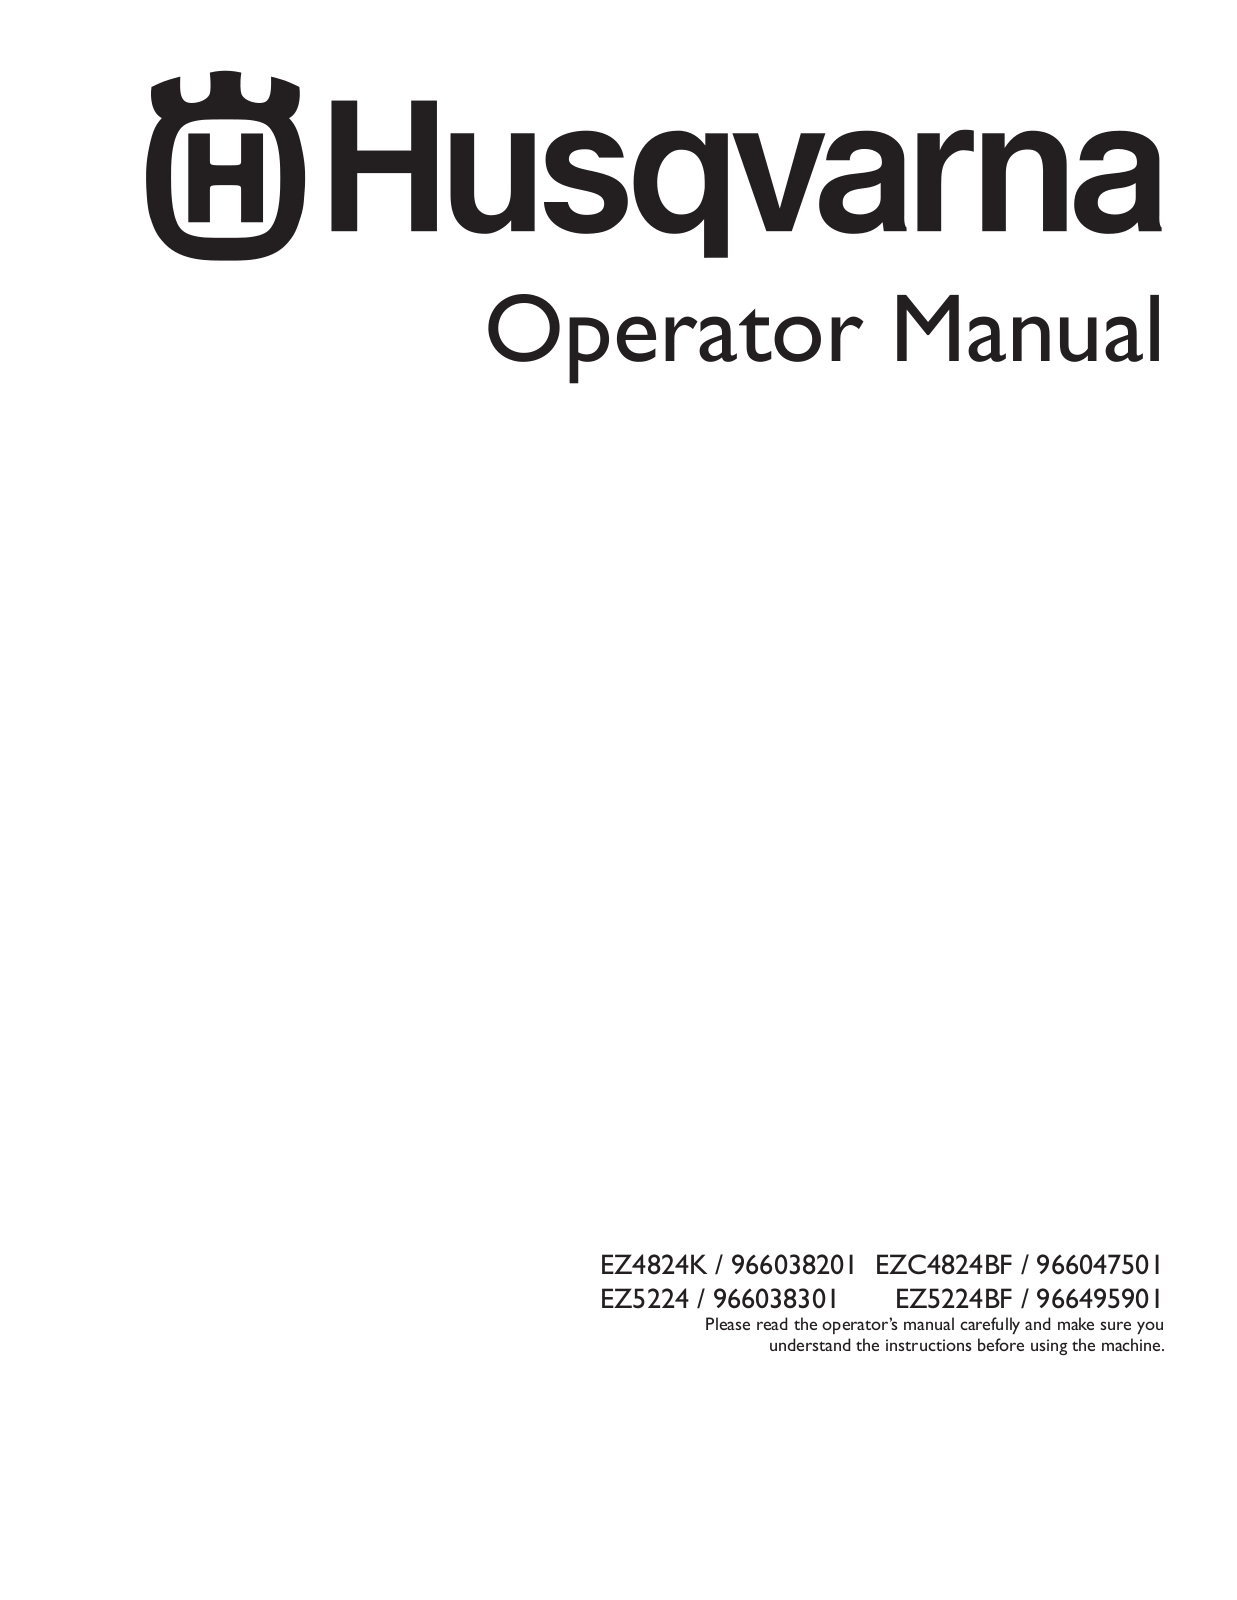 Husqvarna EZC4824BF - 966047501, EZ5224 - 966038301, EZ5224BF - 966495901, EZ4824K - 966038201 User Manual